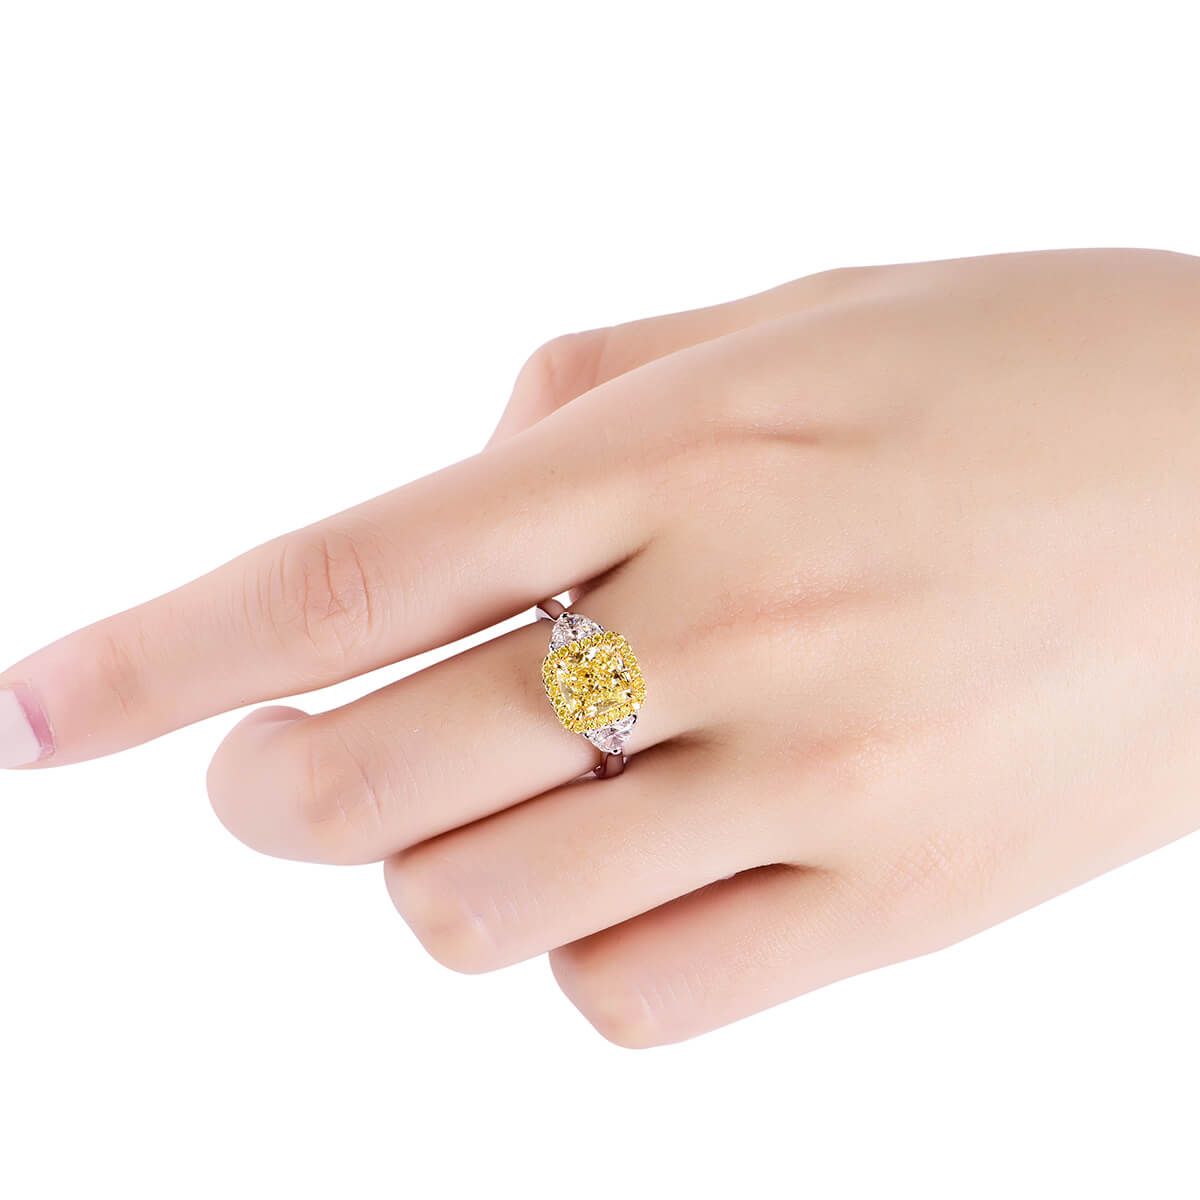 Light Yellow (Y-Z) Diamond Ring, 2.04 Ct. (2.73 Ct. TW), Cushion shape, GIA Certified, 6275277739